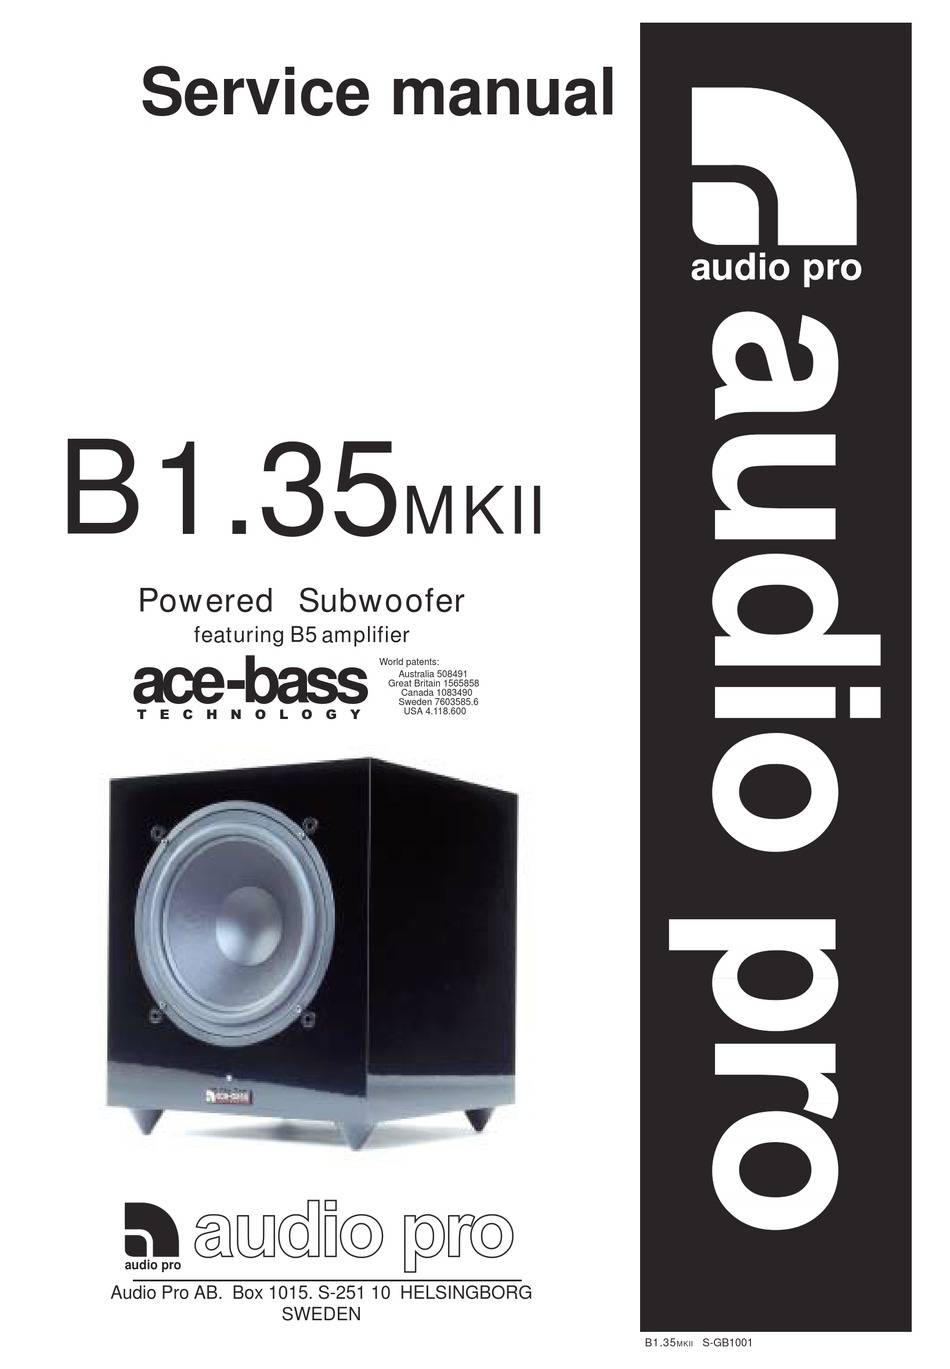 Audio Pro B1-35 (mkII)